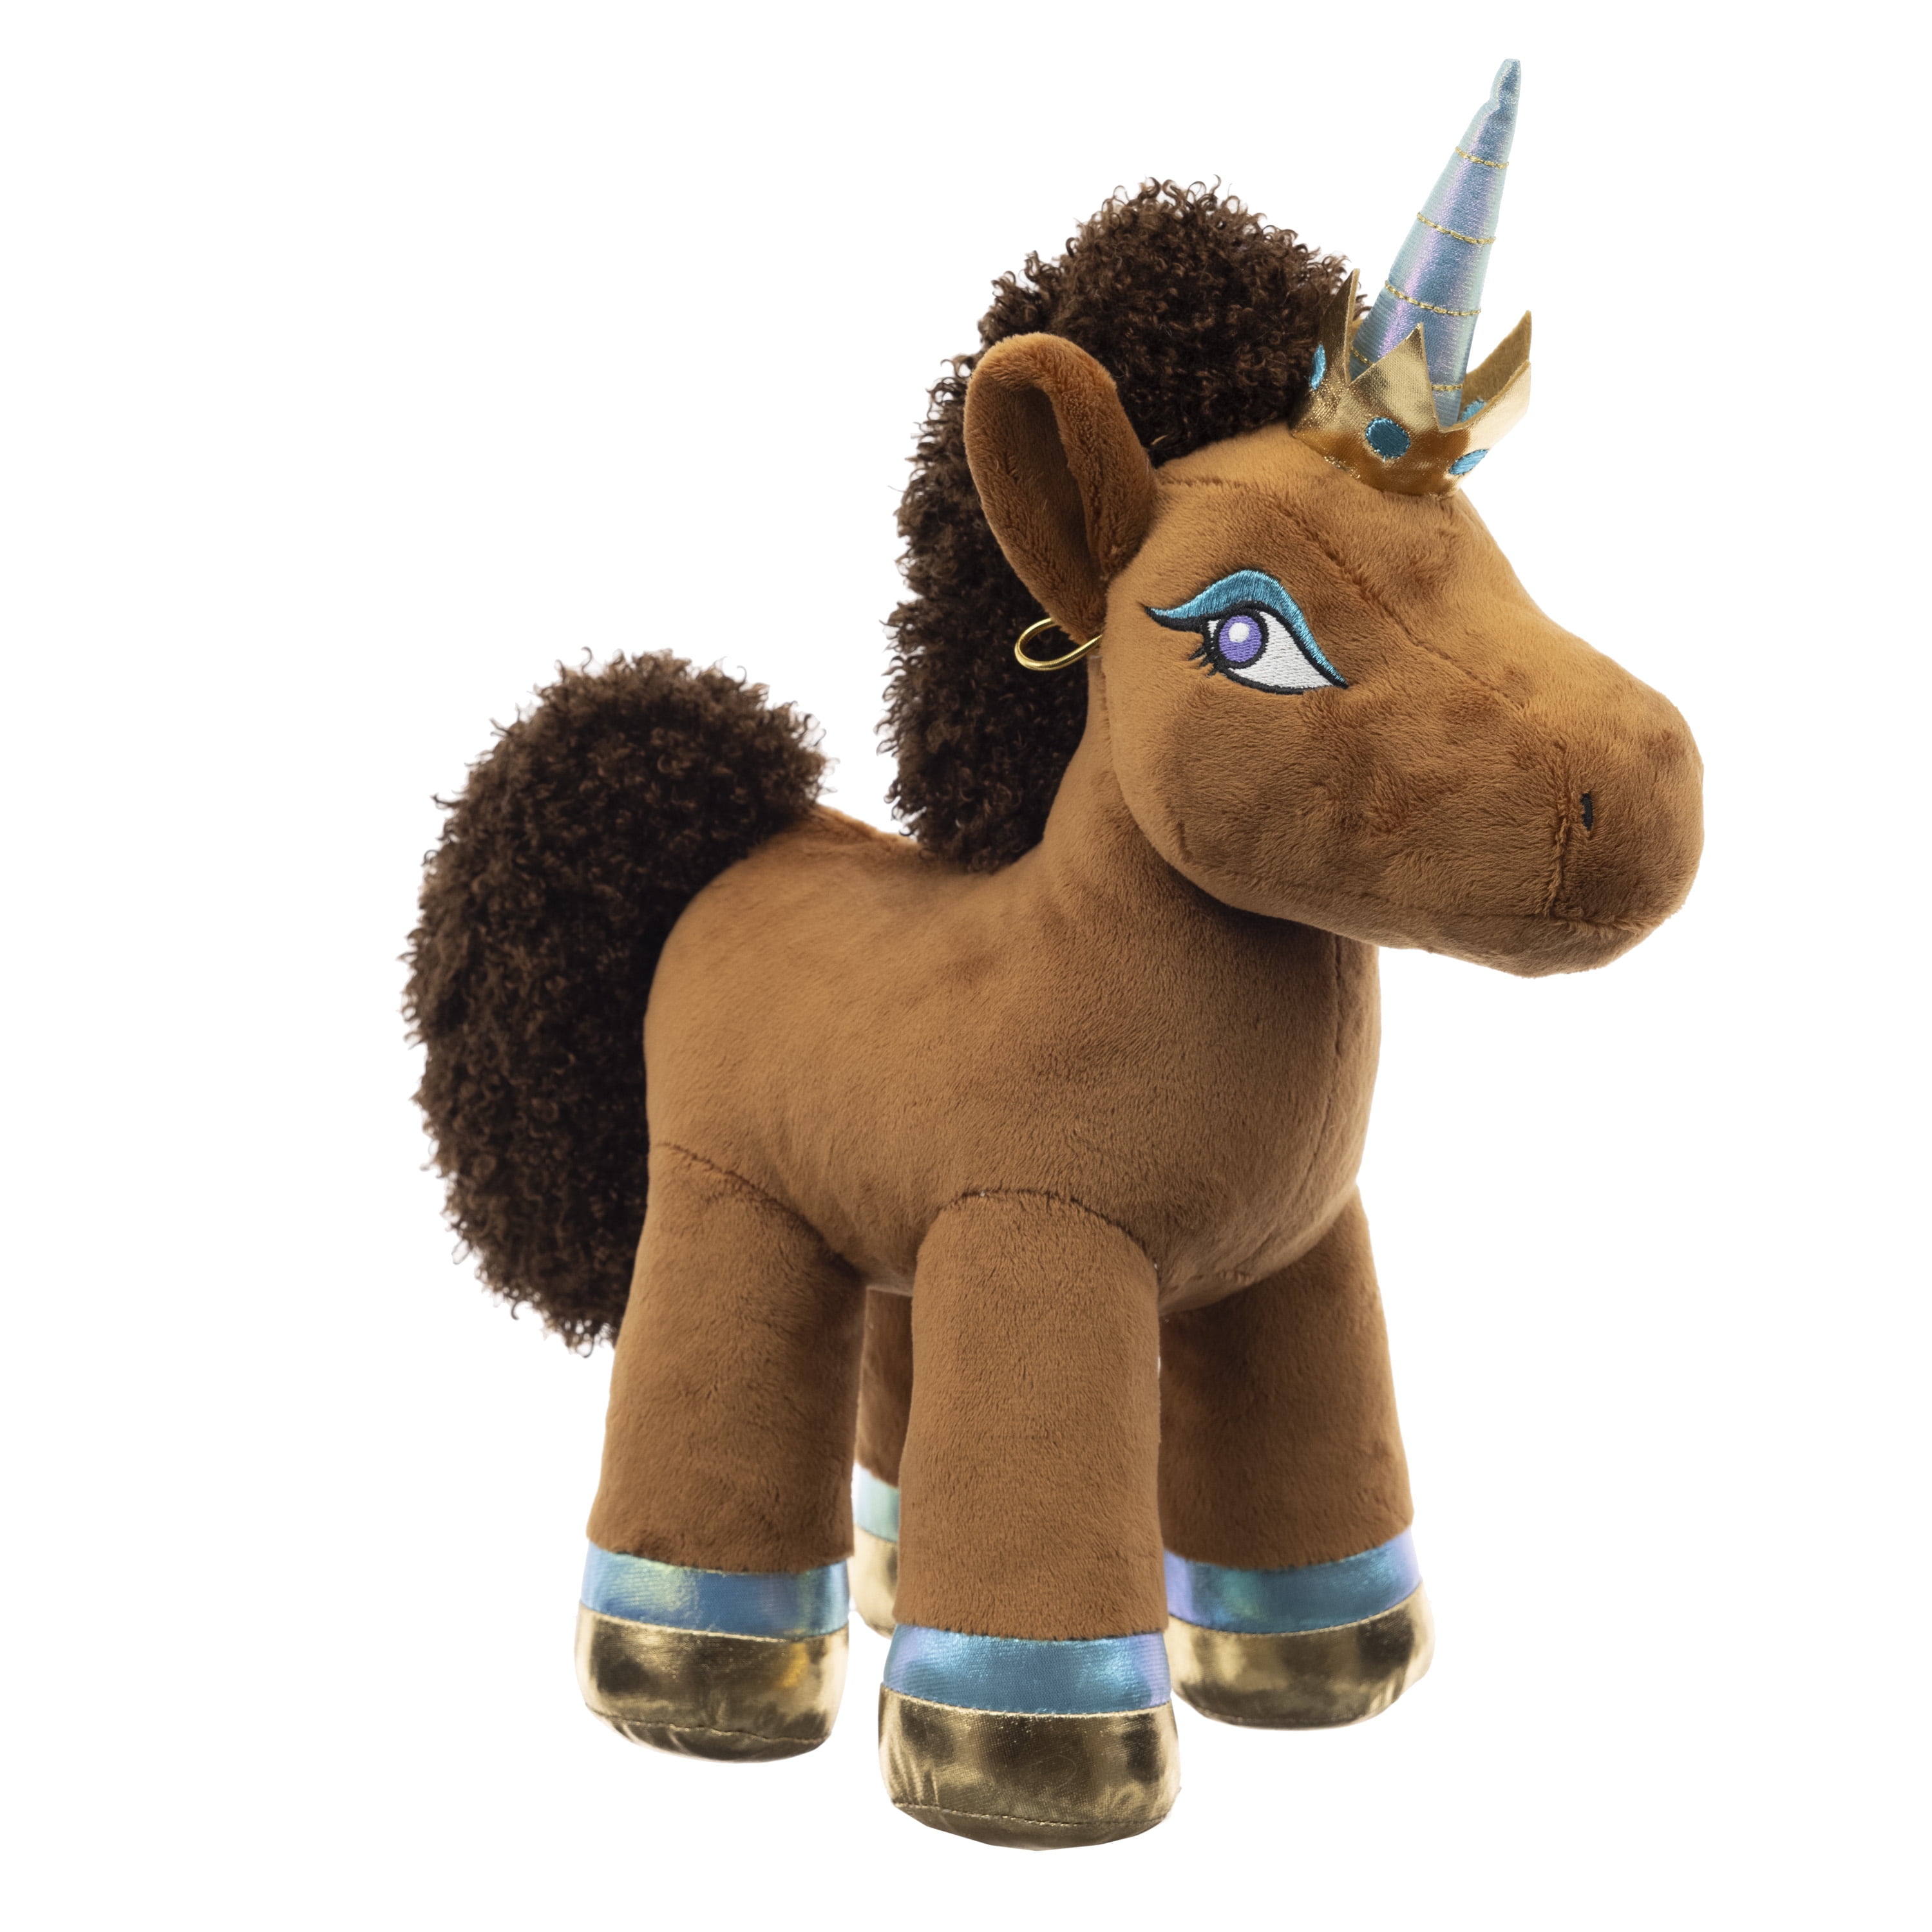 Afro Unicorn 11 inch Stuffed Plush Toy, Unique